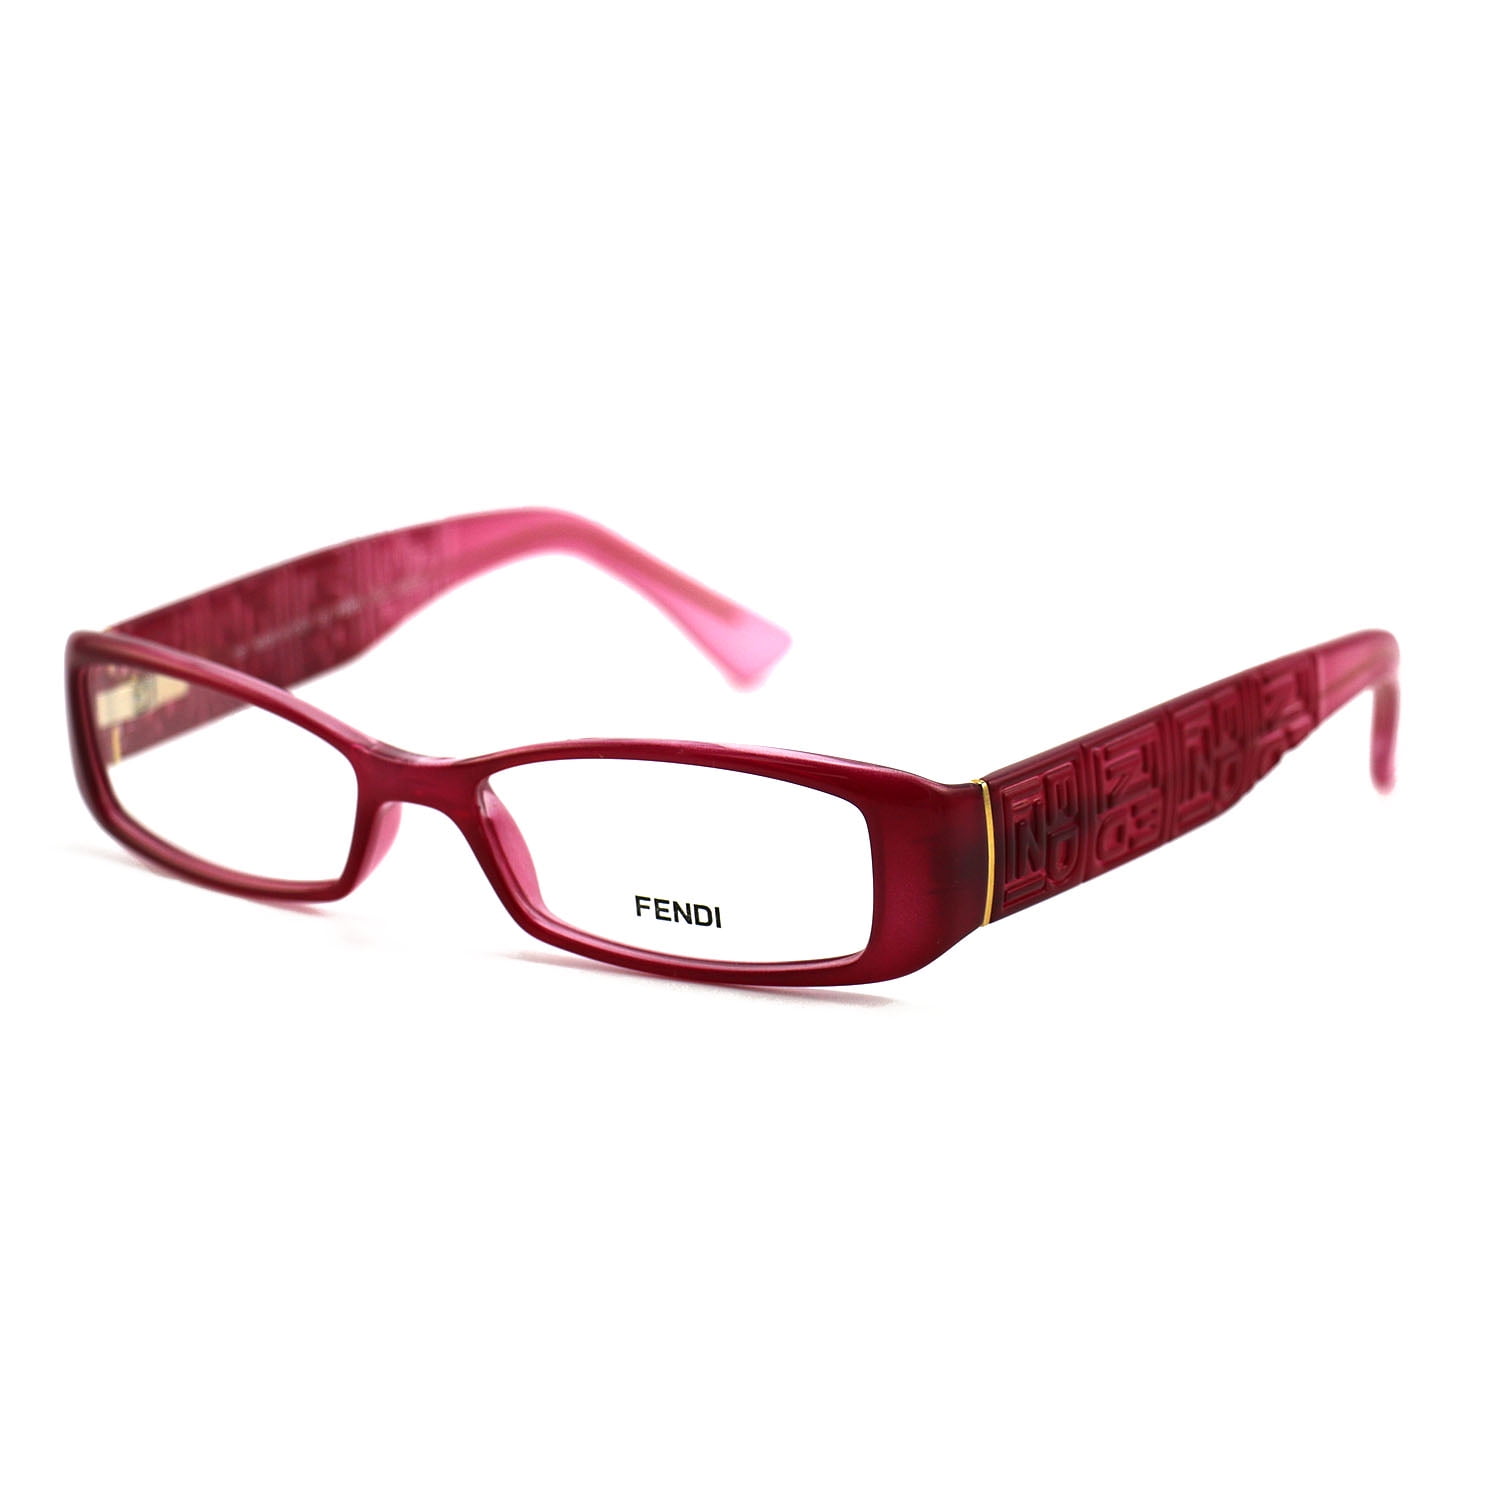 Fendi Womens Eyeglasses F809 525 Pink 51 16 130 Frames Rectangular